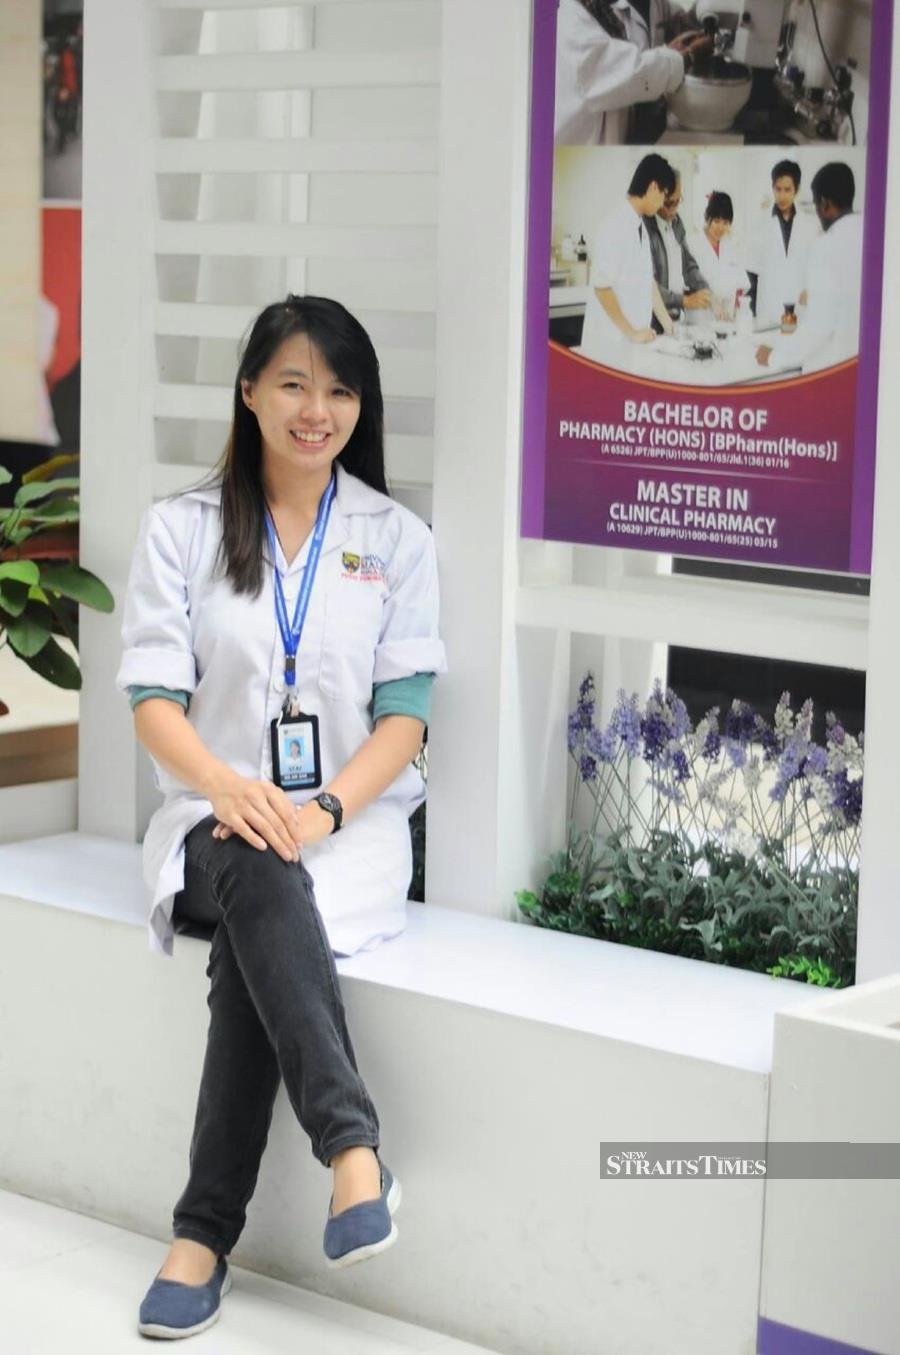  Ng pursued a Bachelor of Pharmacy at the University of Cyberjaya.